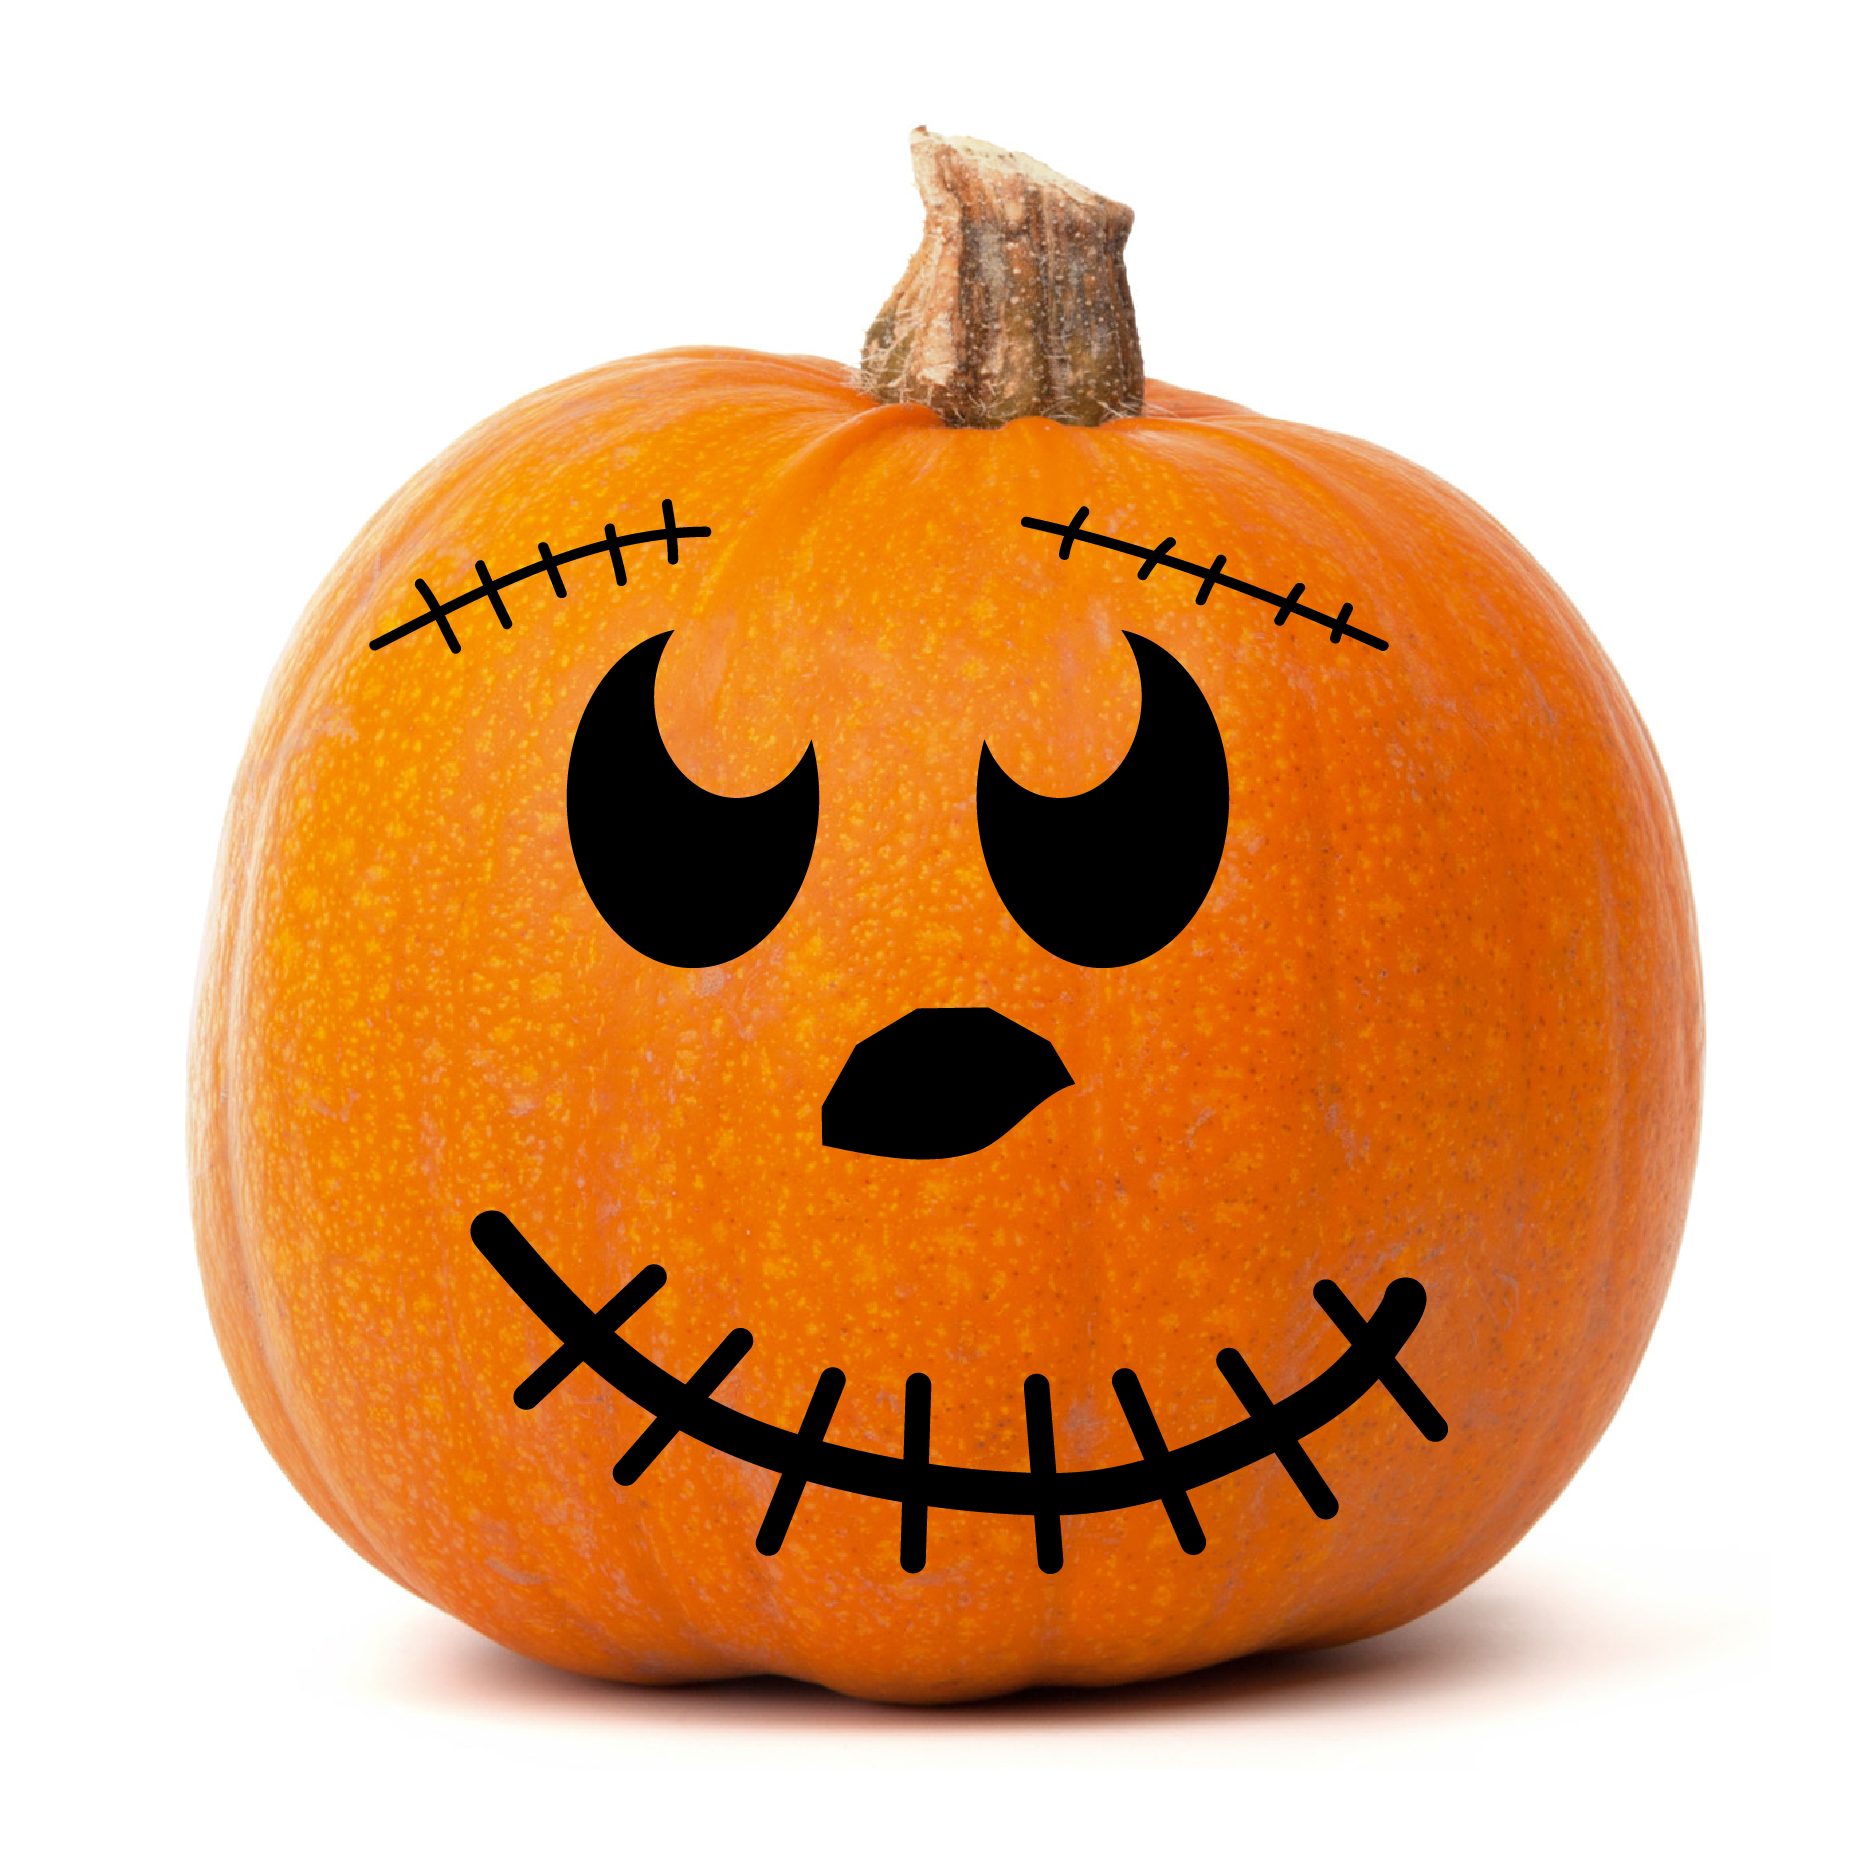  Smiley Pumpkin  Face Wall Quotes  Decal WallQuotes com